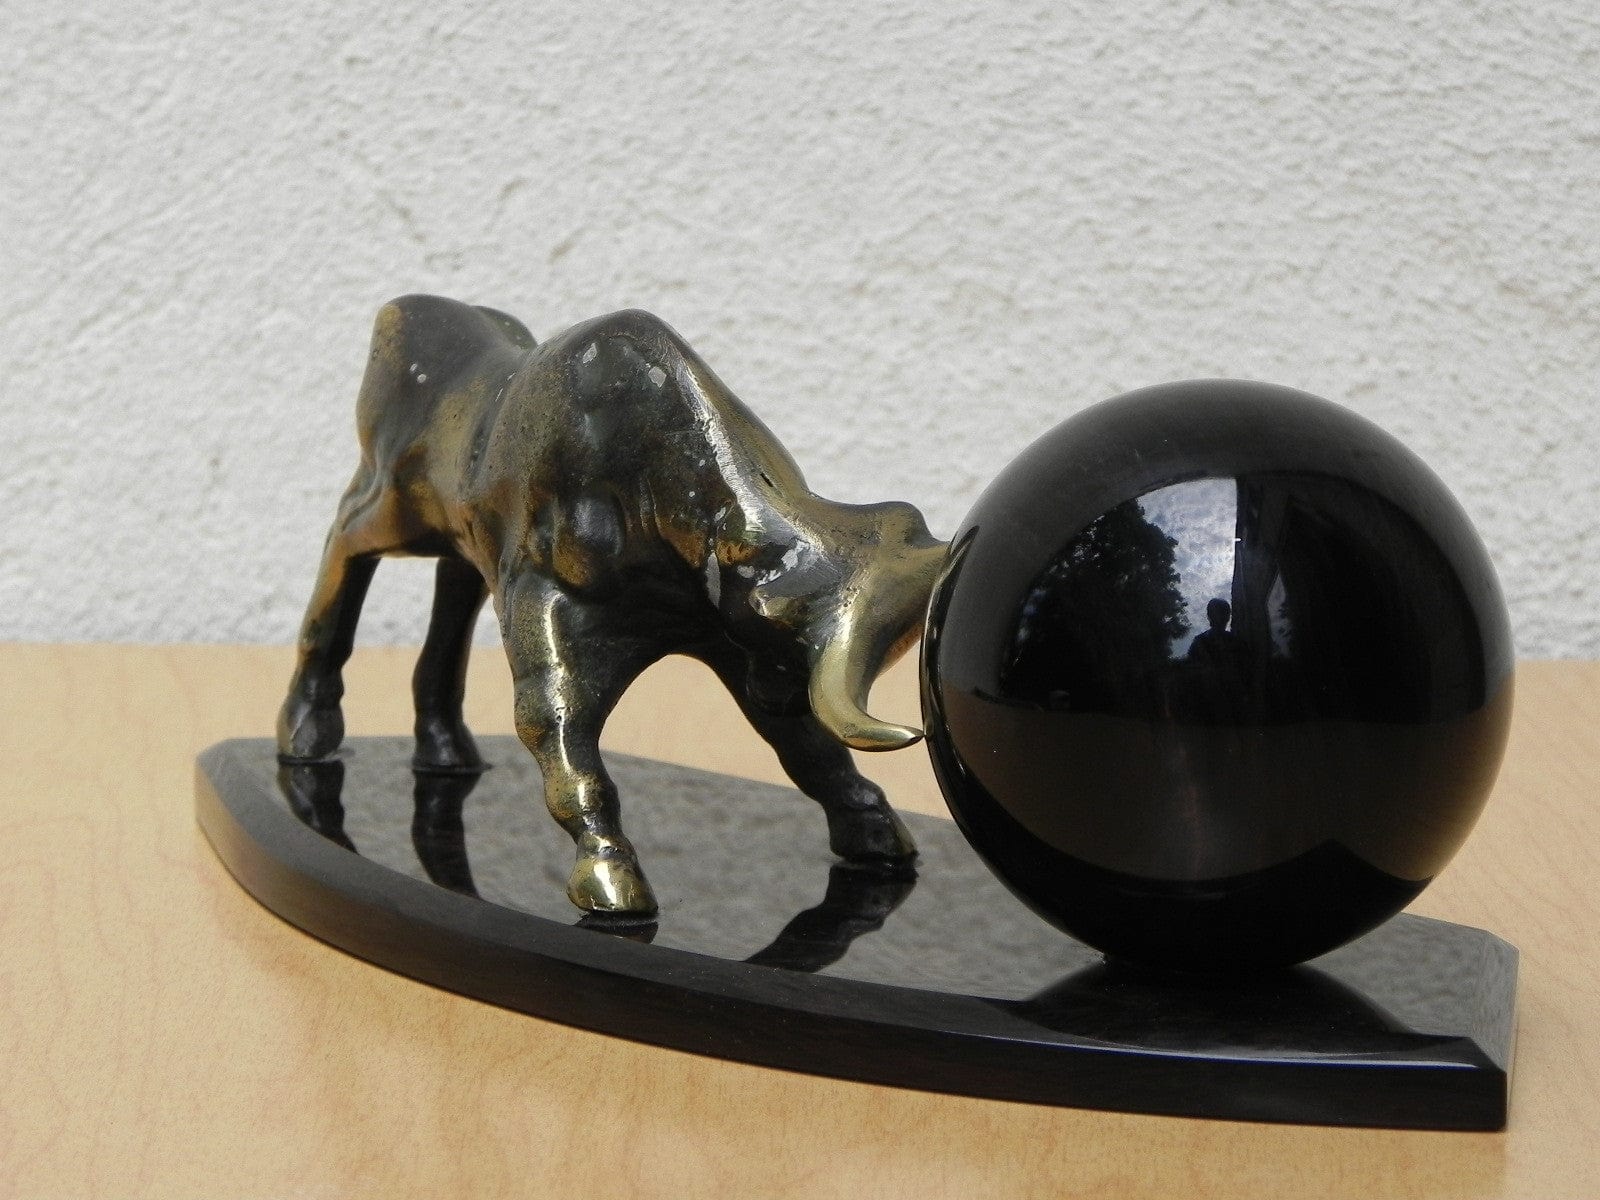 I Like Mike's Mid Century Modern Clock Brass Bull Pushing Black Marble Ball Desk Clock Sculpture